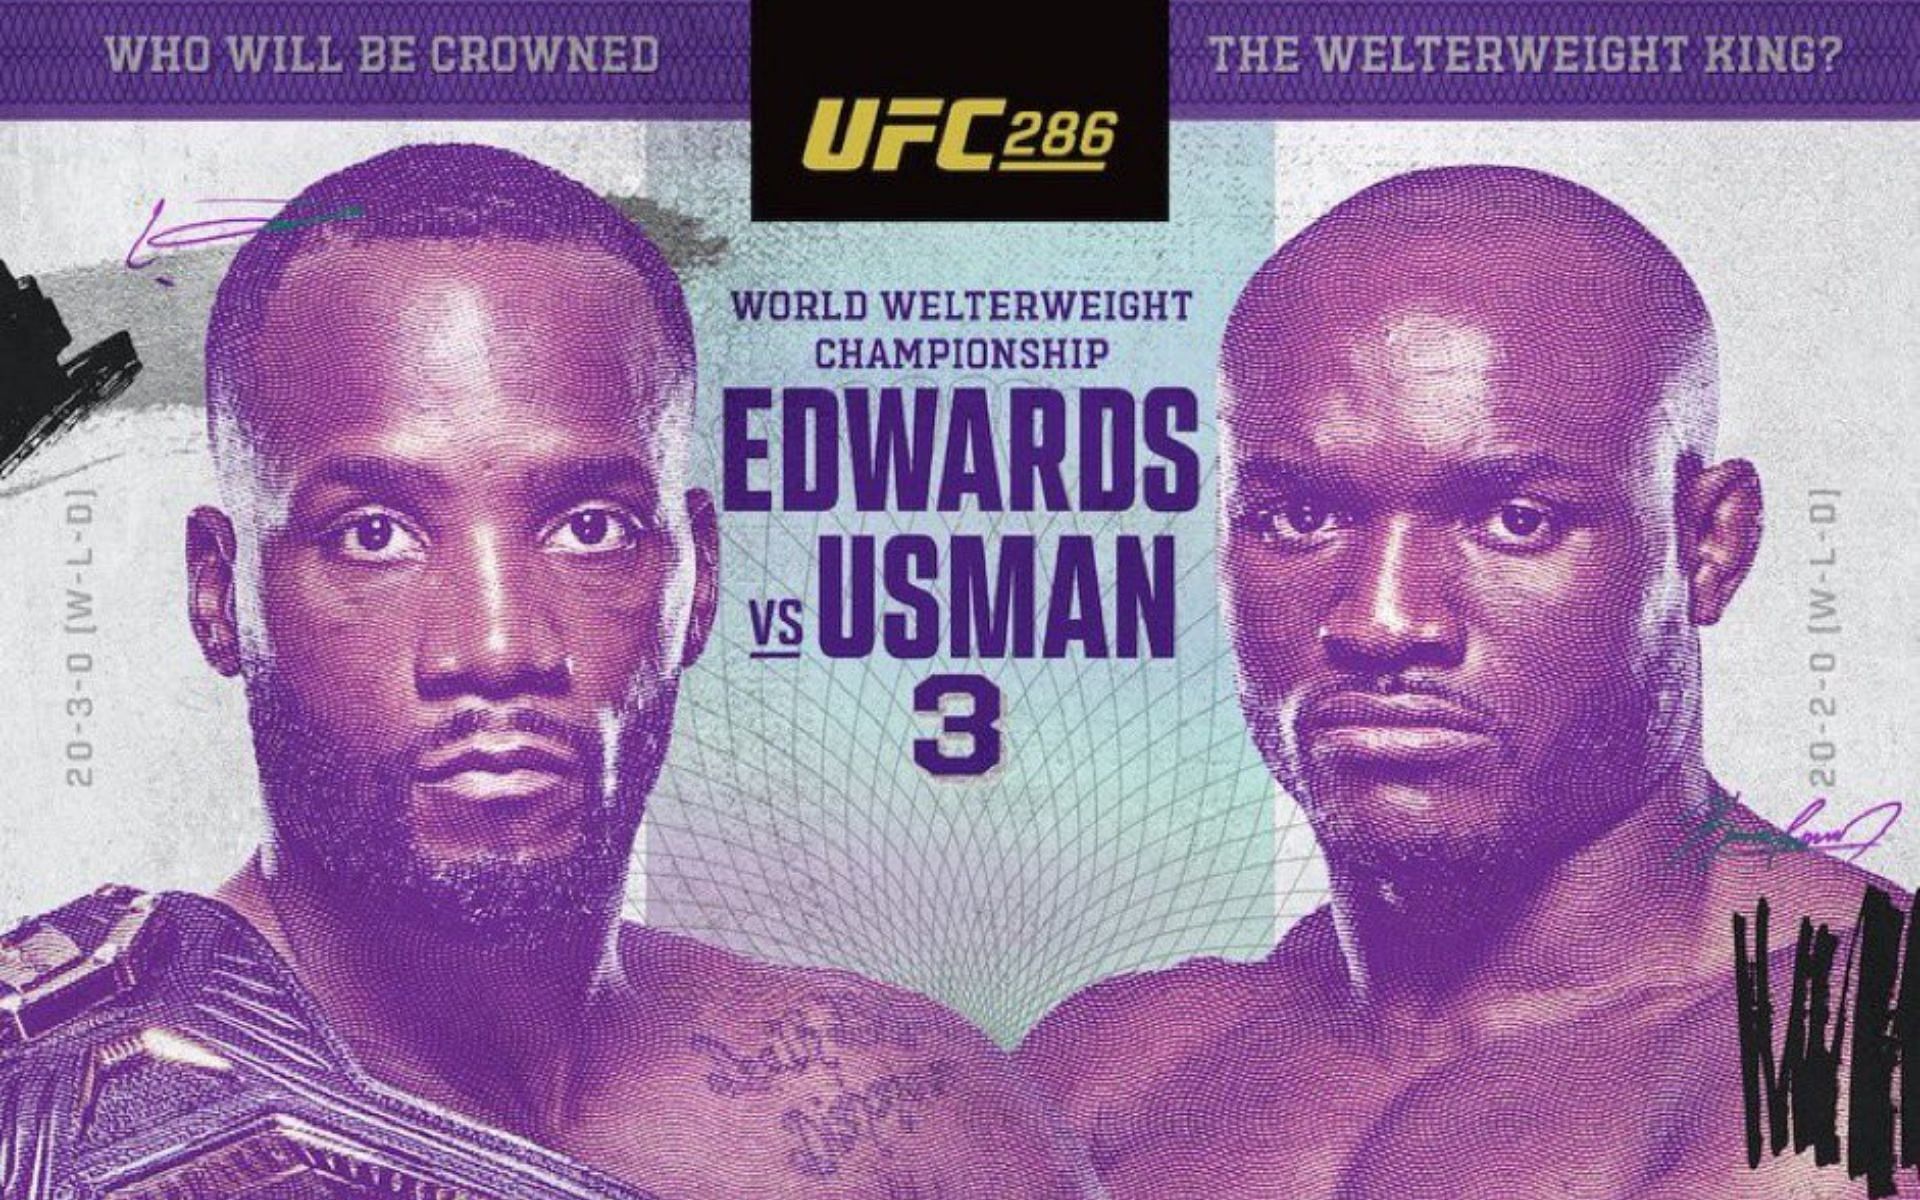 UFC 286 poster featuring Leon Edwards vs. Kamaru Usman [Image courtesy: @Fightgeektweets on Twitter]